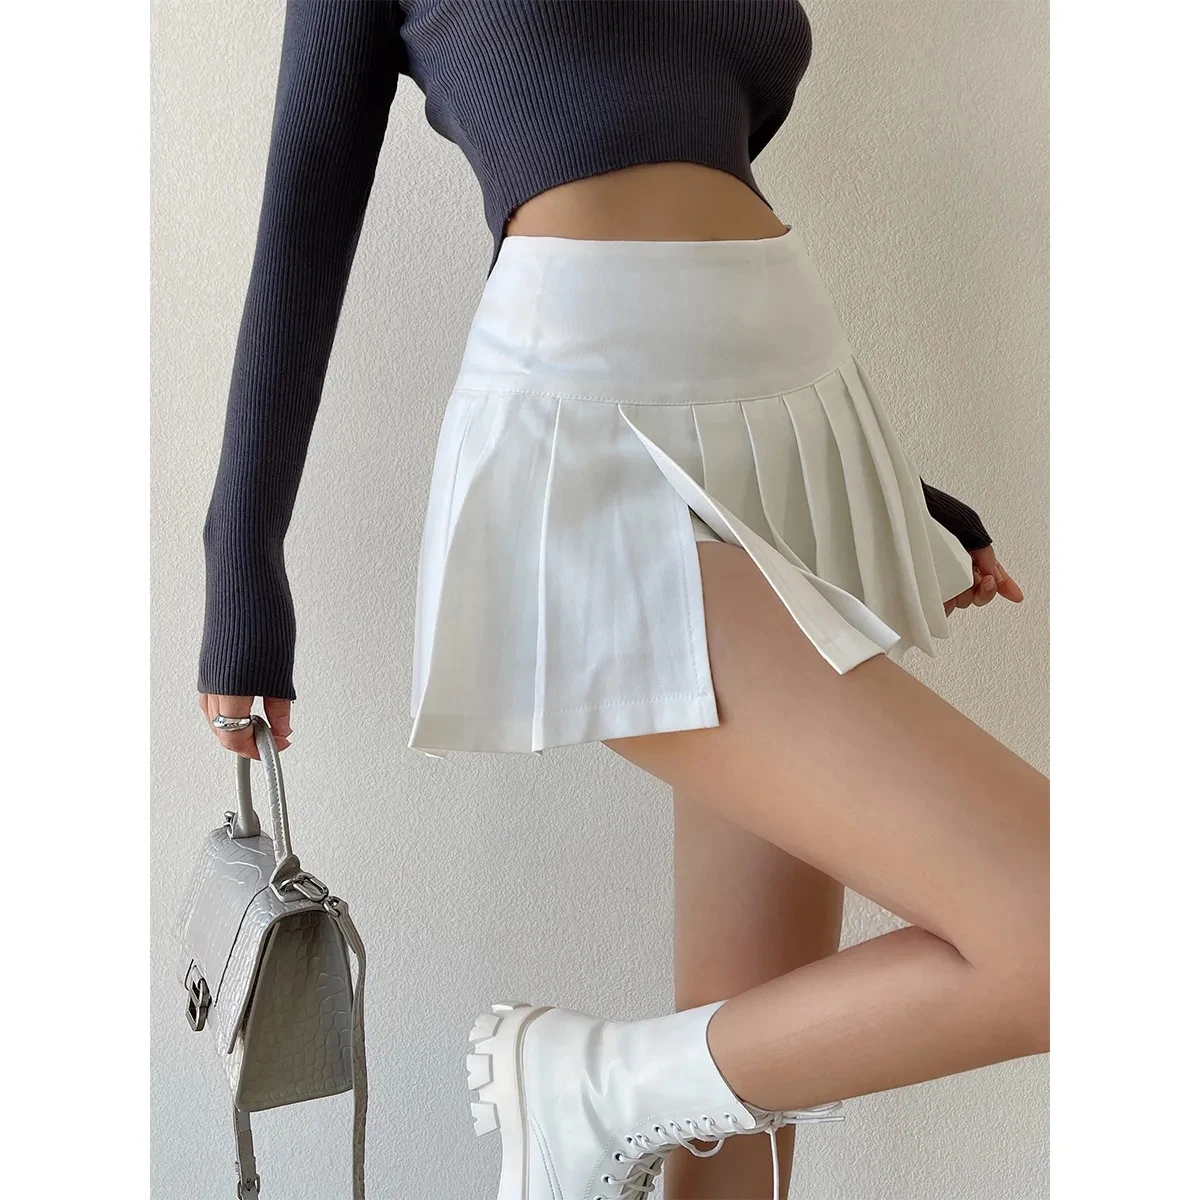 Cool Sexy Short Mini Skirt Girls Slit Dress White Skirts High Waisted A Line Women's Kilt Summer Cool Fillibeg